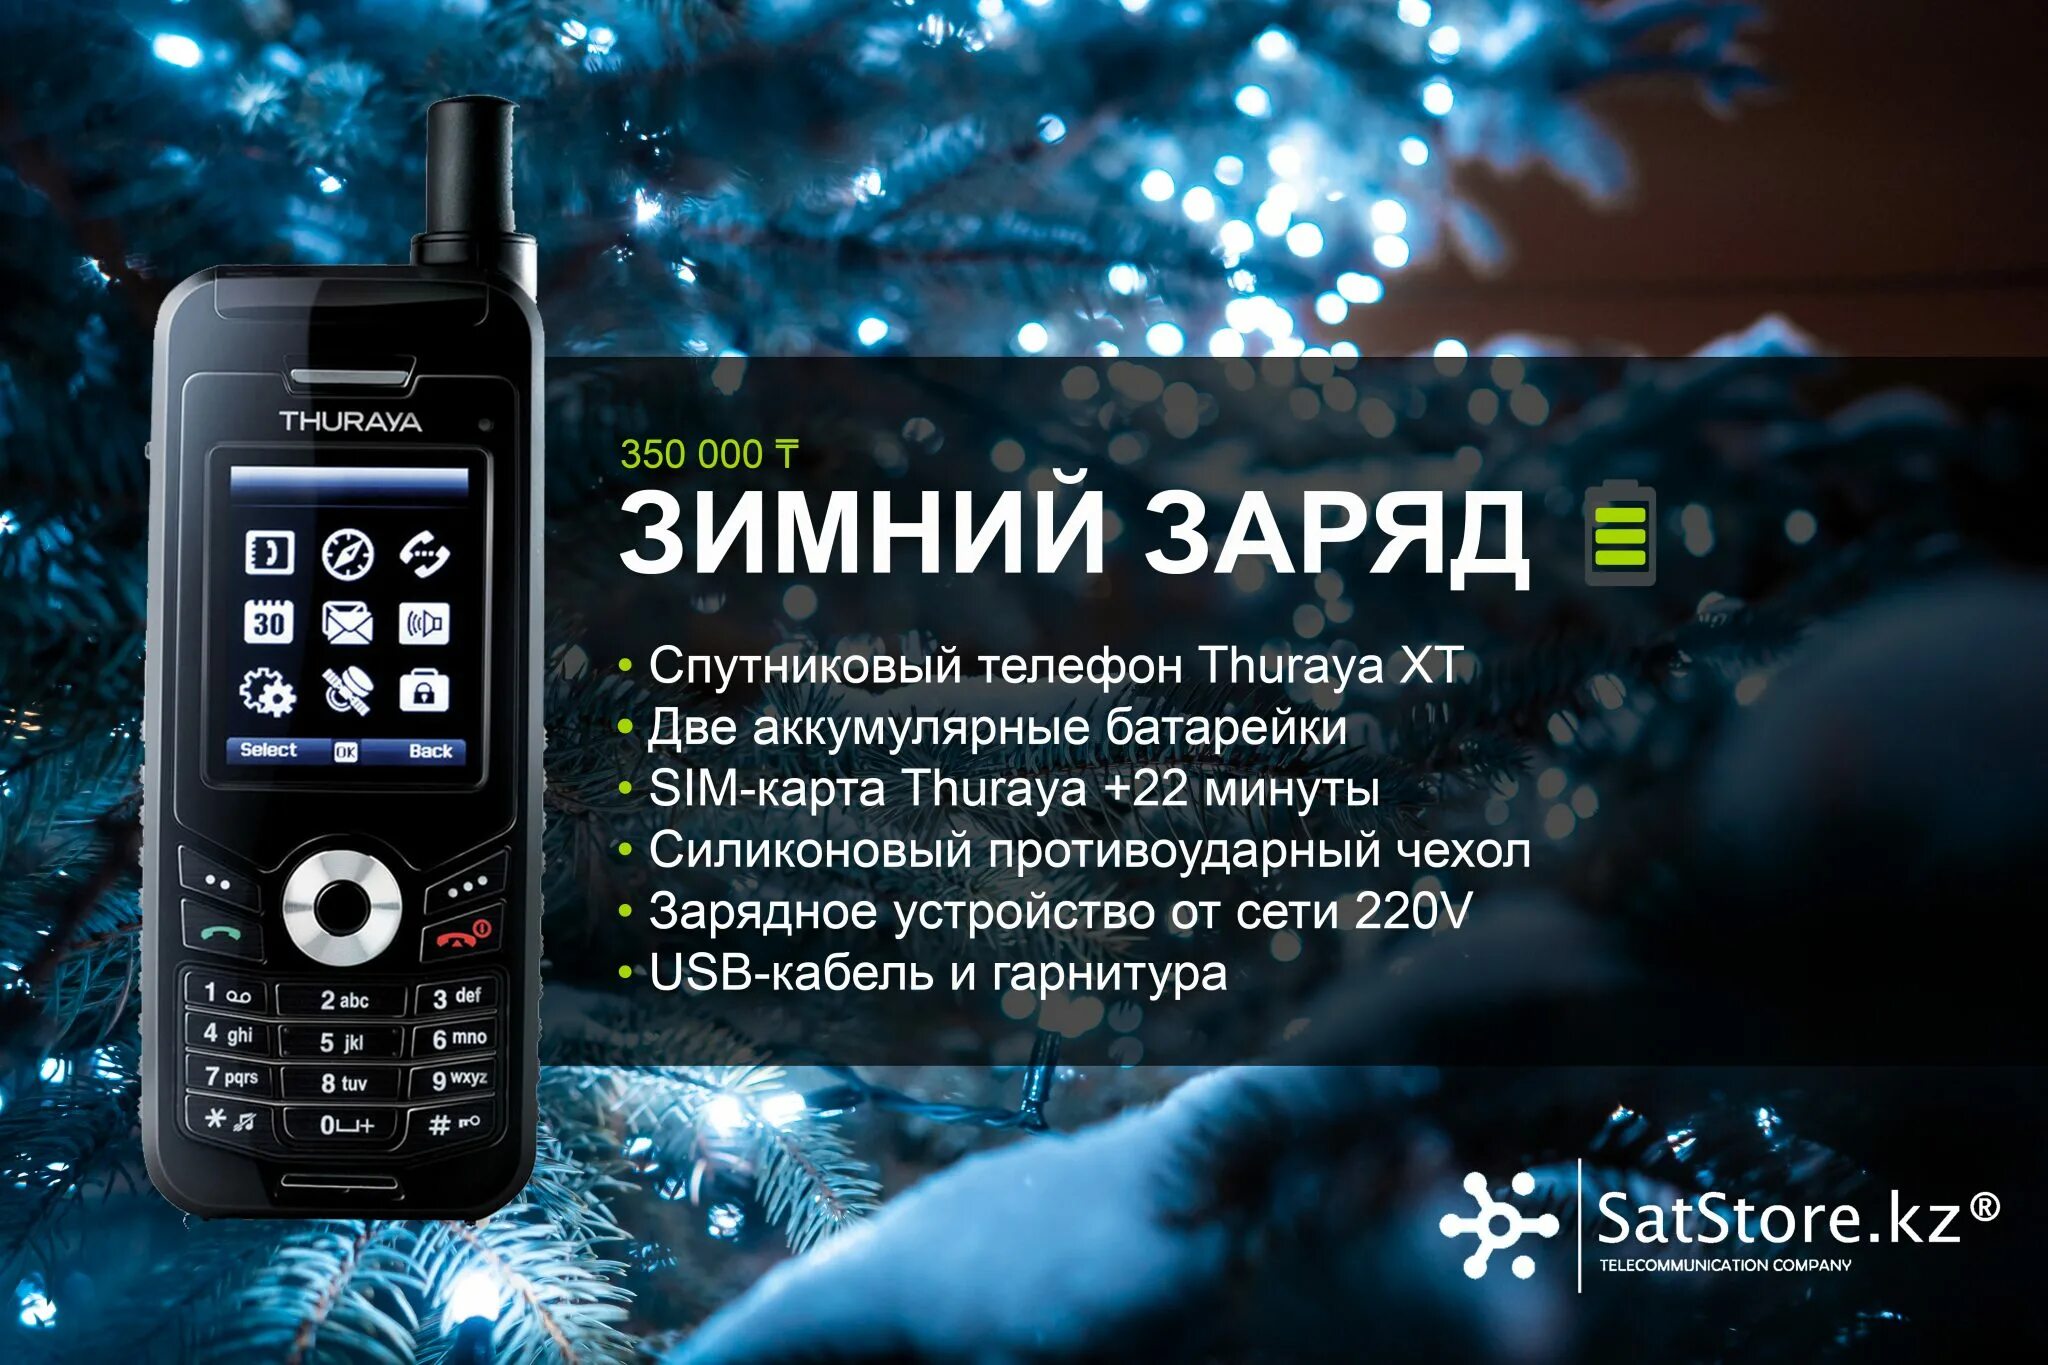 Турая спутниковый телефон. Спутниковый телефон Thuraya XT-Pro. Thuraya x5-Touch. Турайя Иридиум. Система связи Турайя.